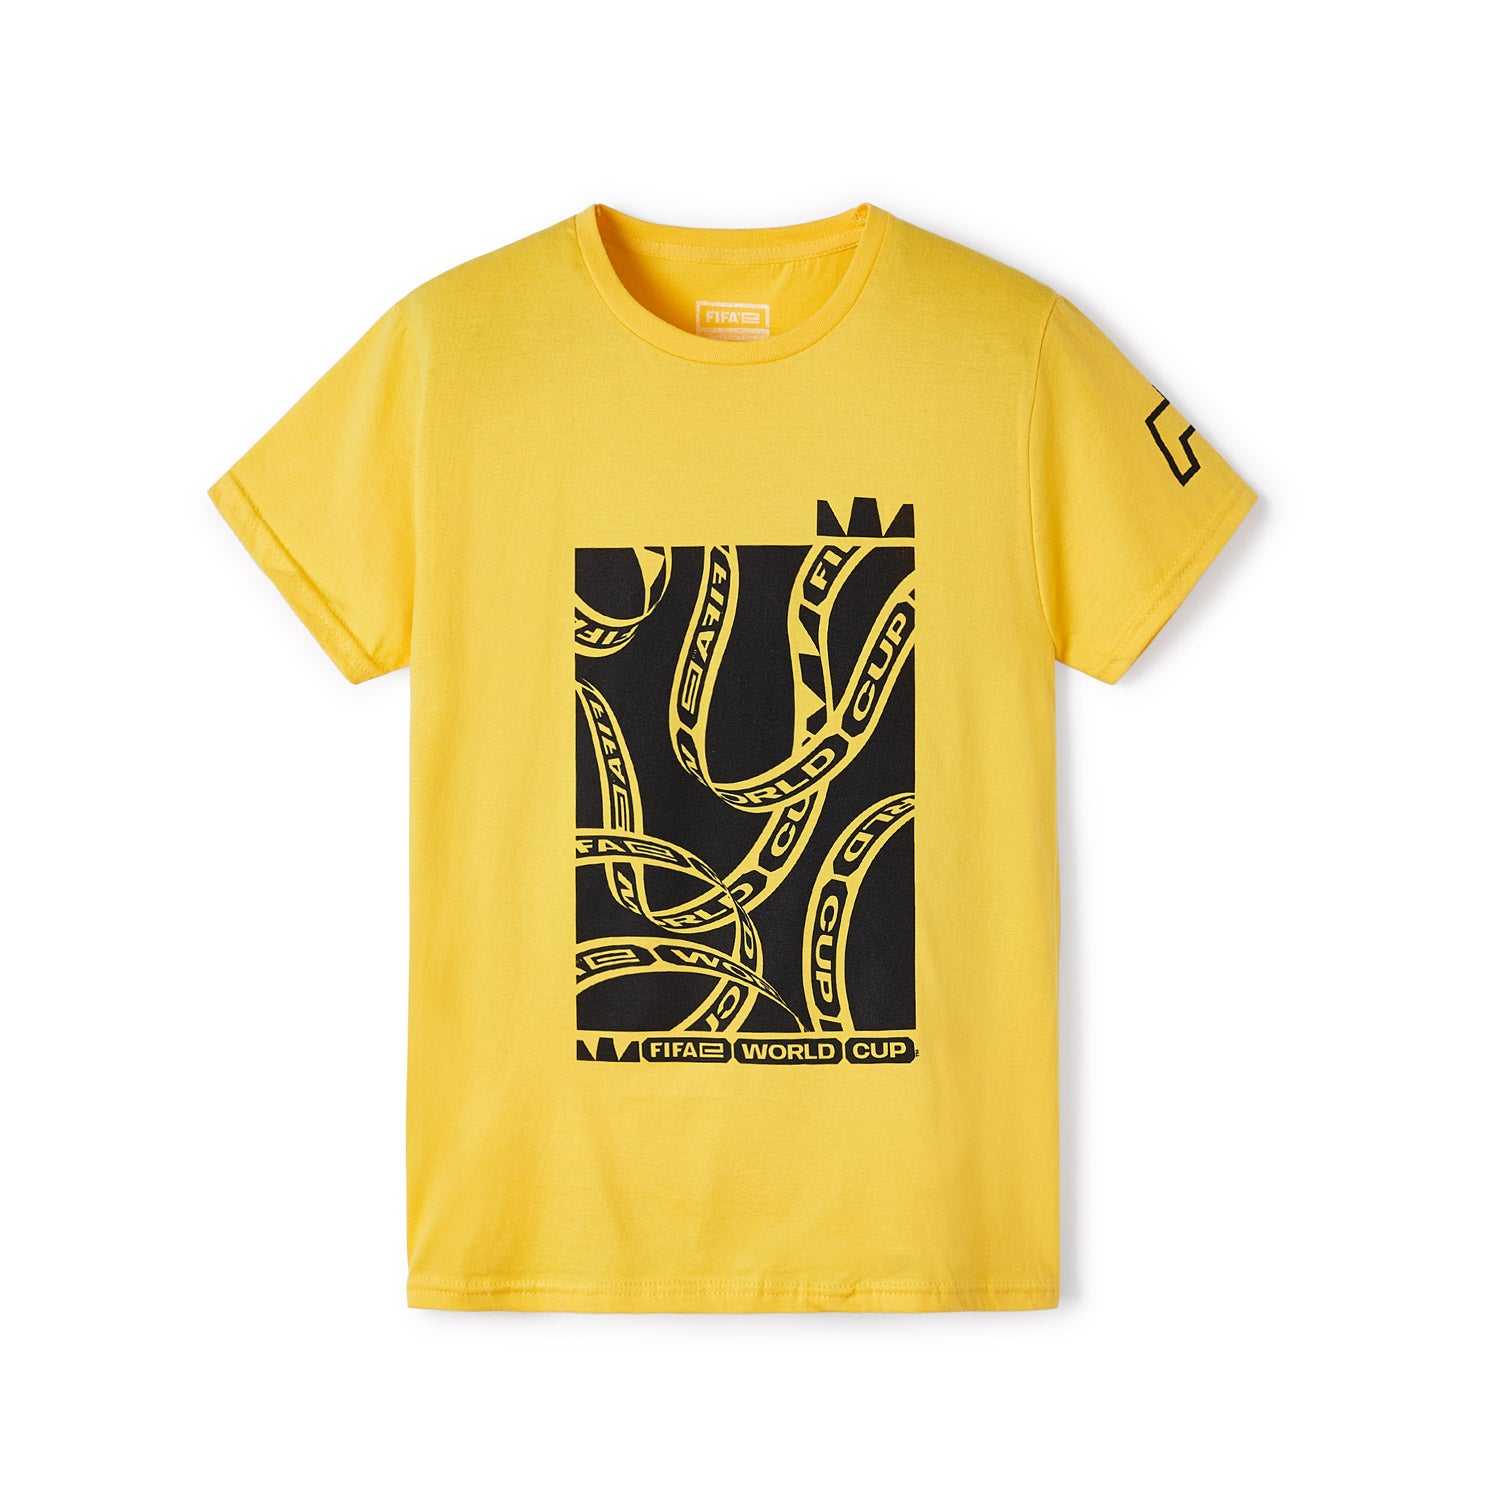 FIFAe World Cup T-Shirt Yellow - Men's